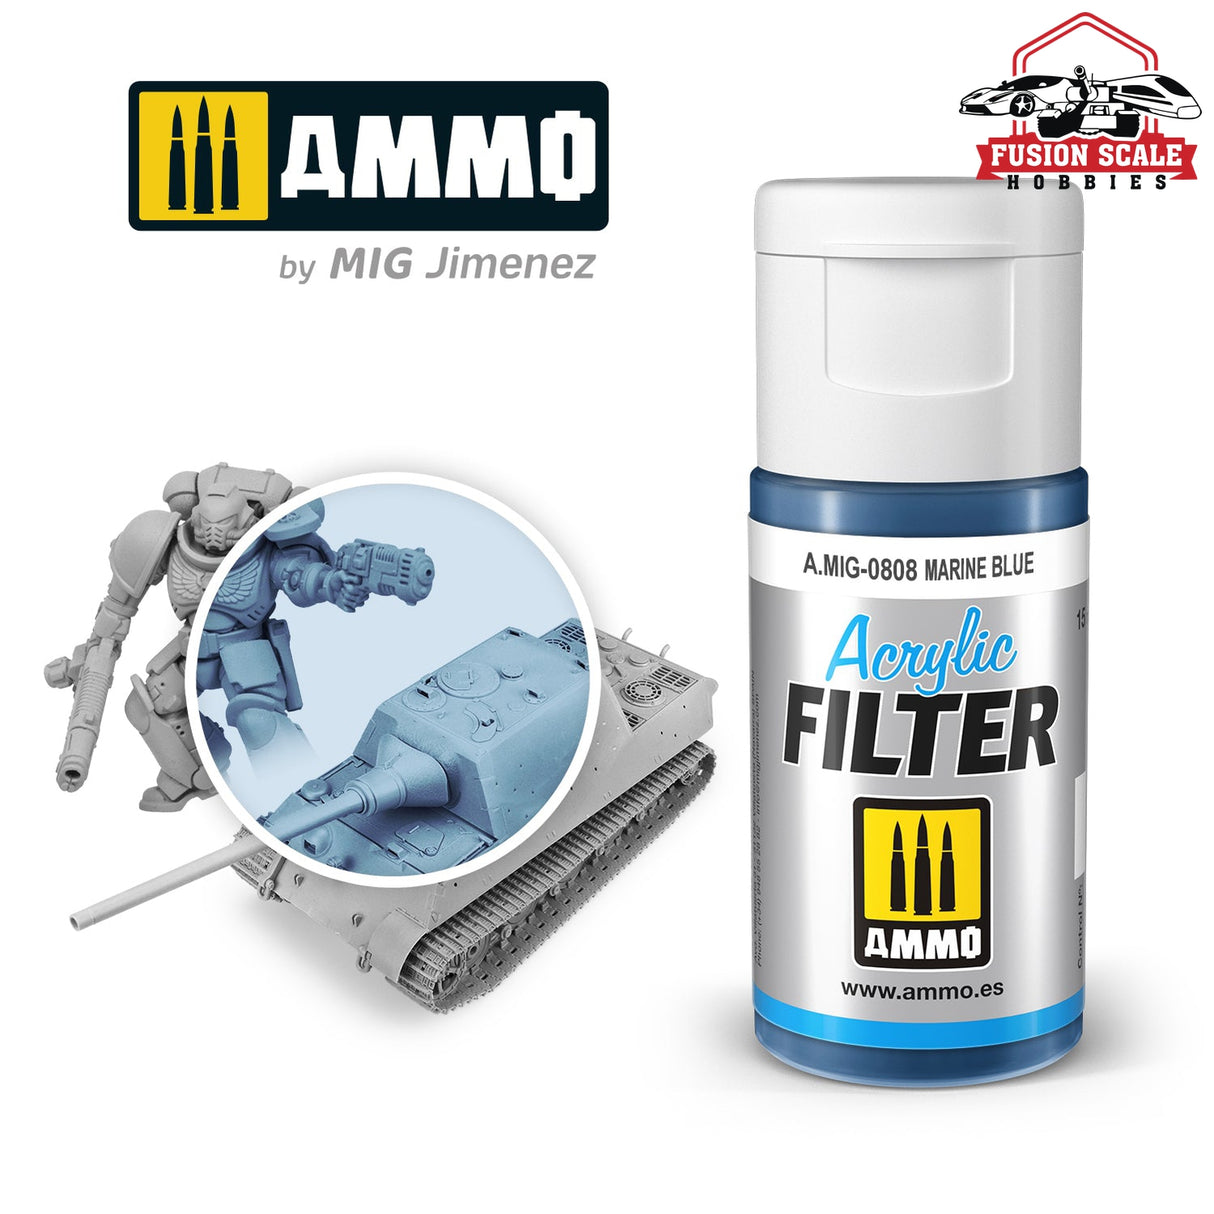 Ammo Mig Jimenez Acrylic Filter Marine Blue - Fusion Scale Hobbies